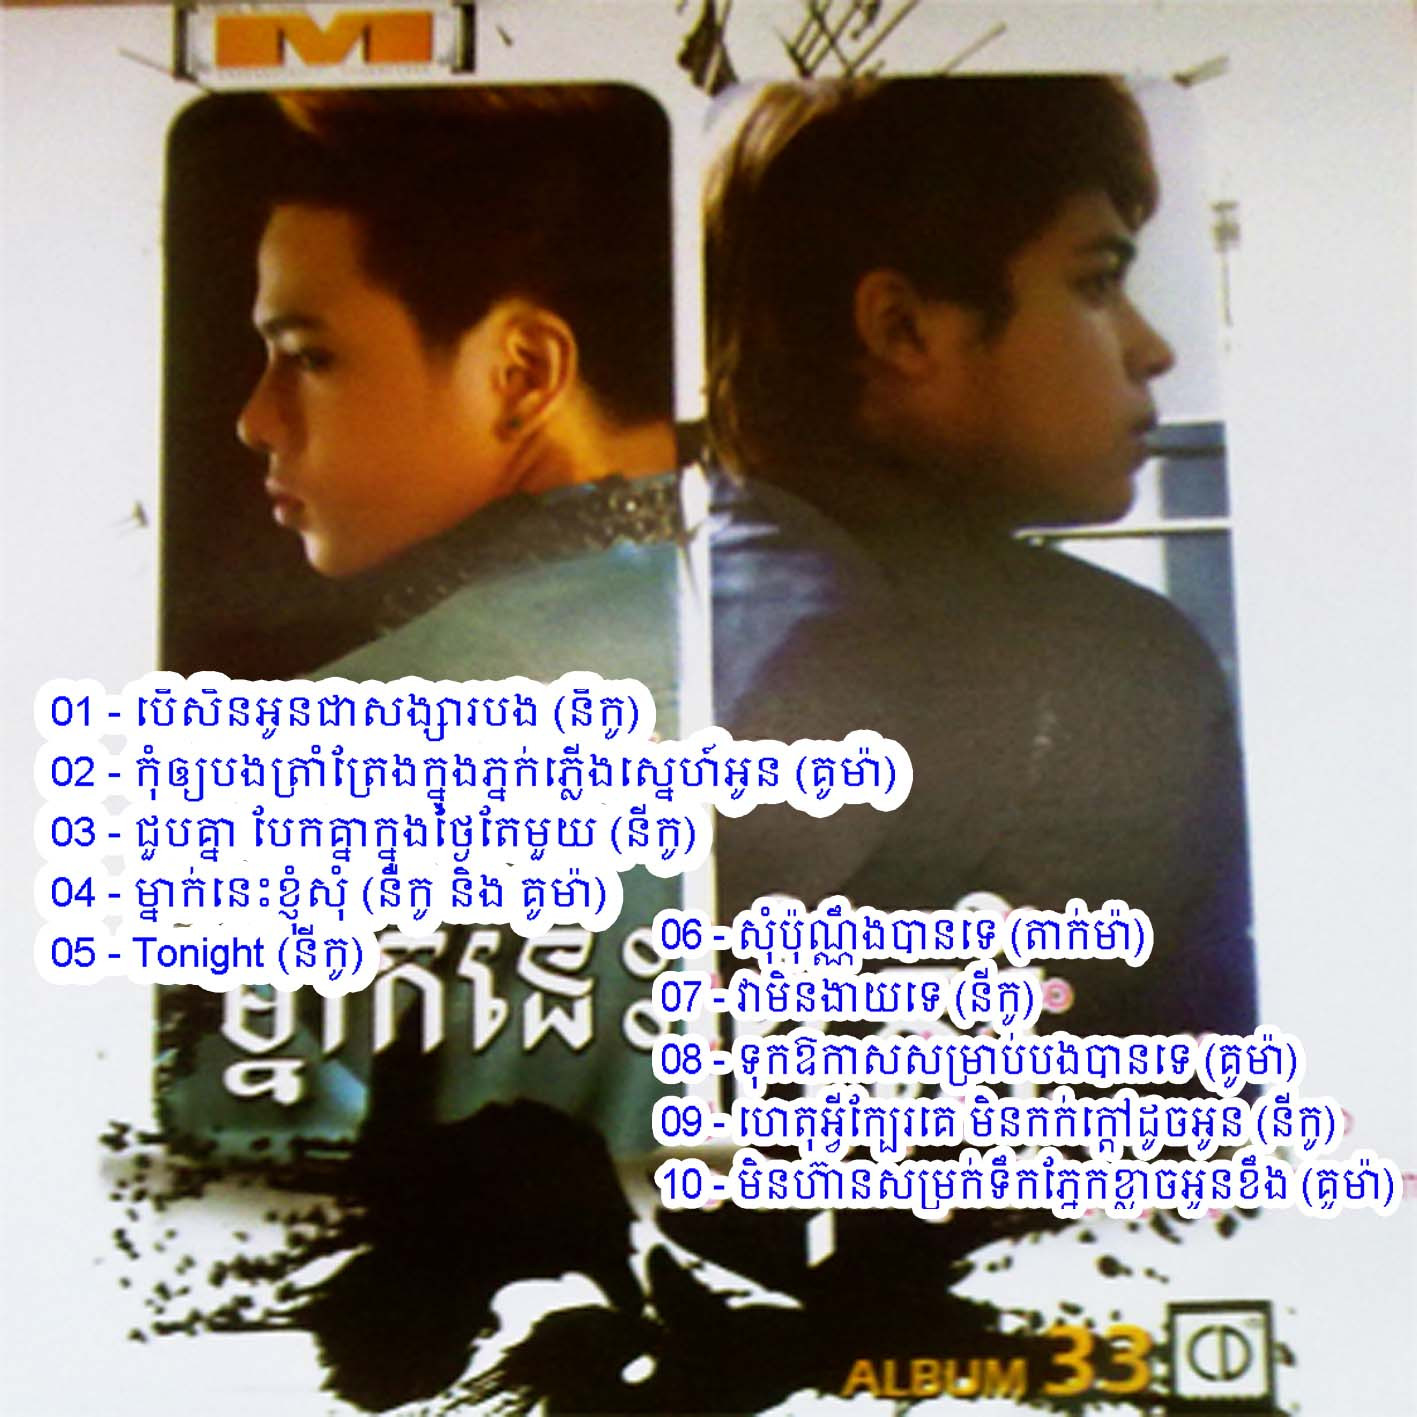 M CD Vol 33